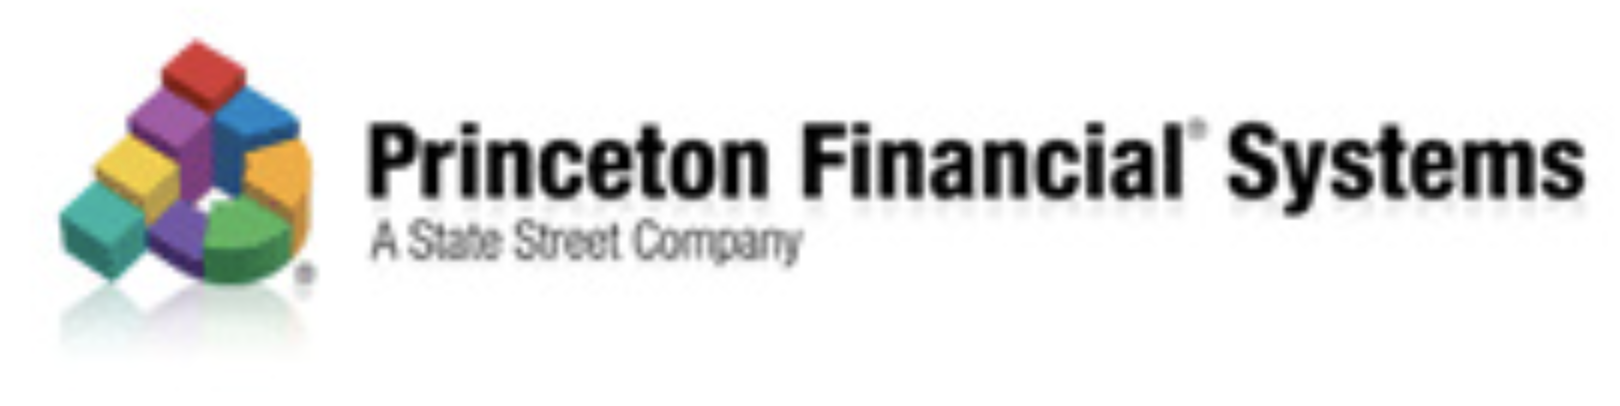 Deals | Princeton Financial Systems | Aquin | Goldenhill International M&A Advisors